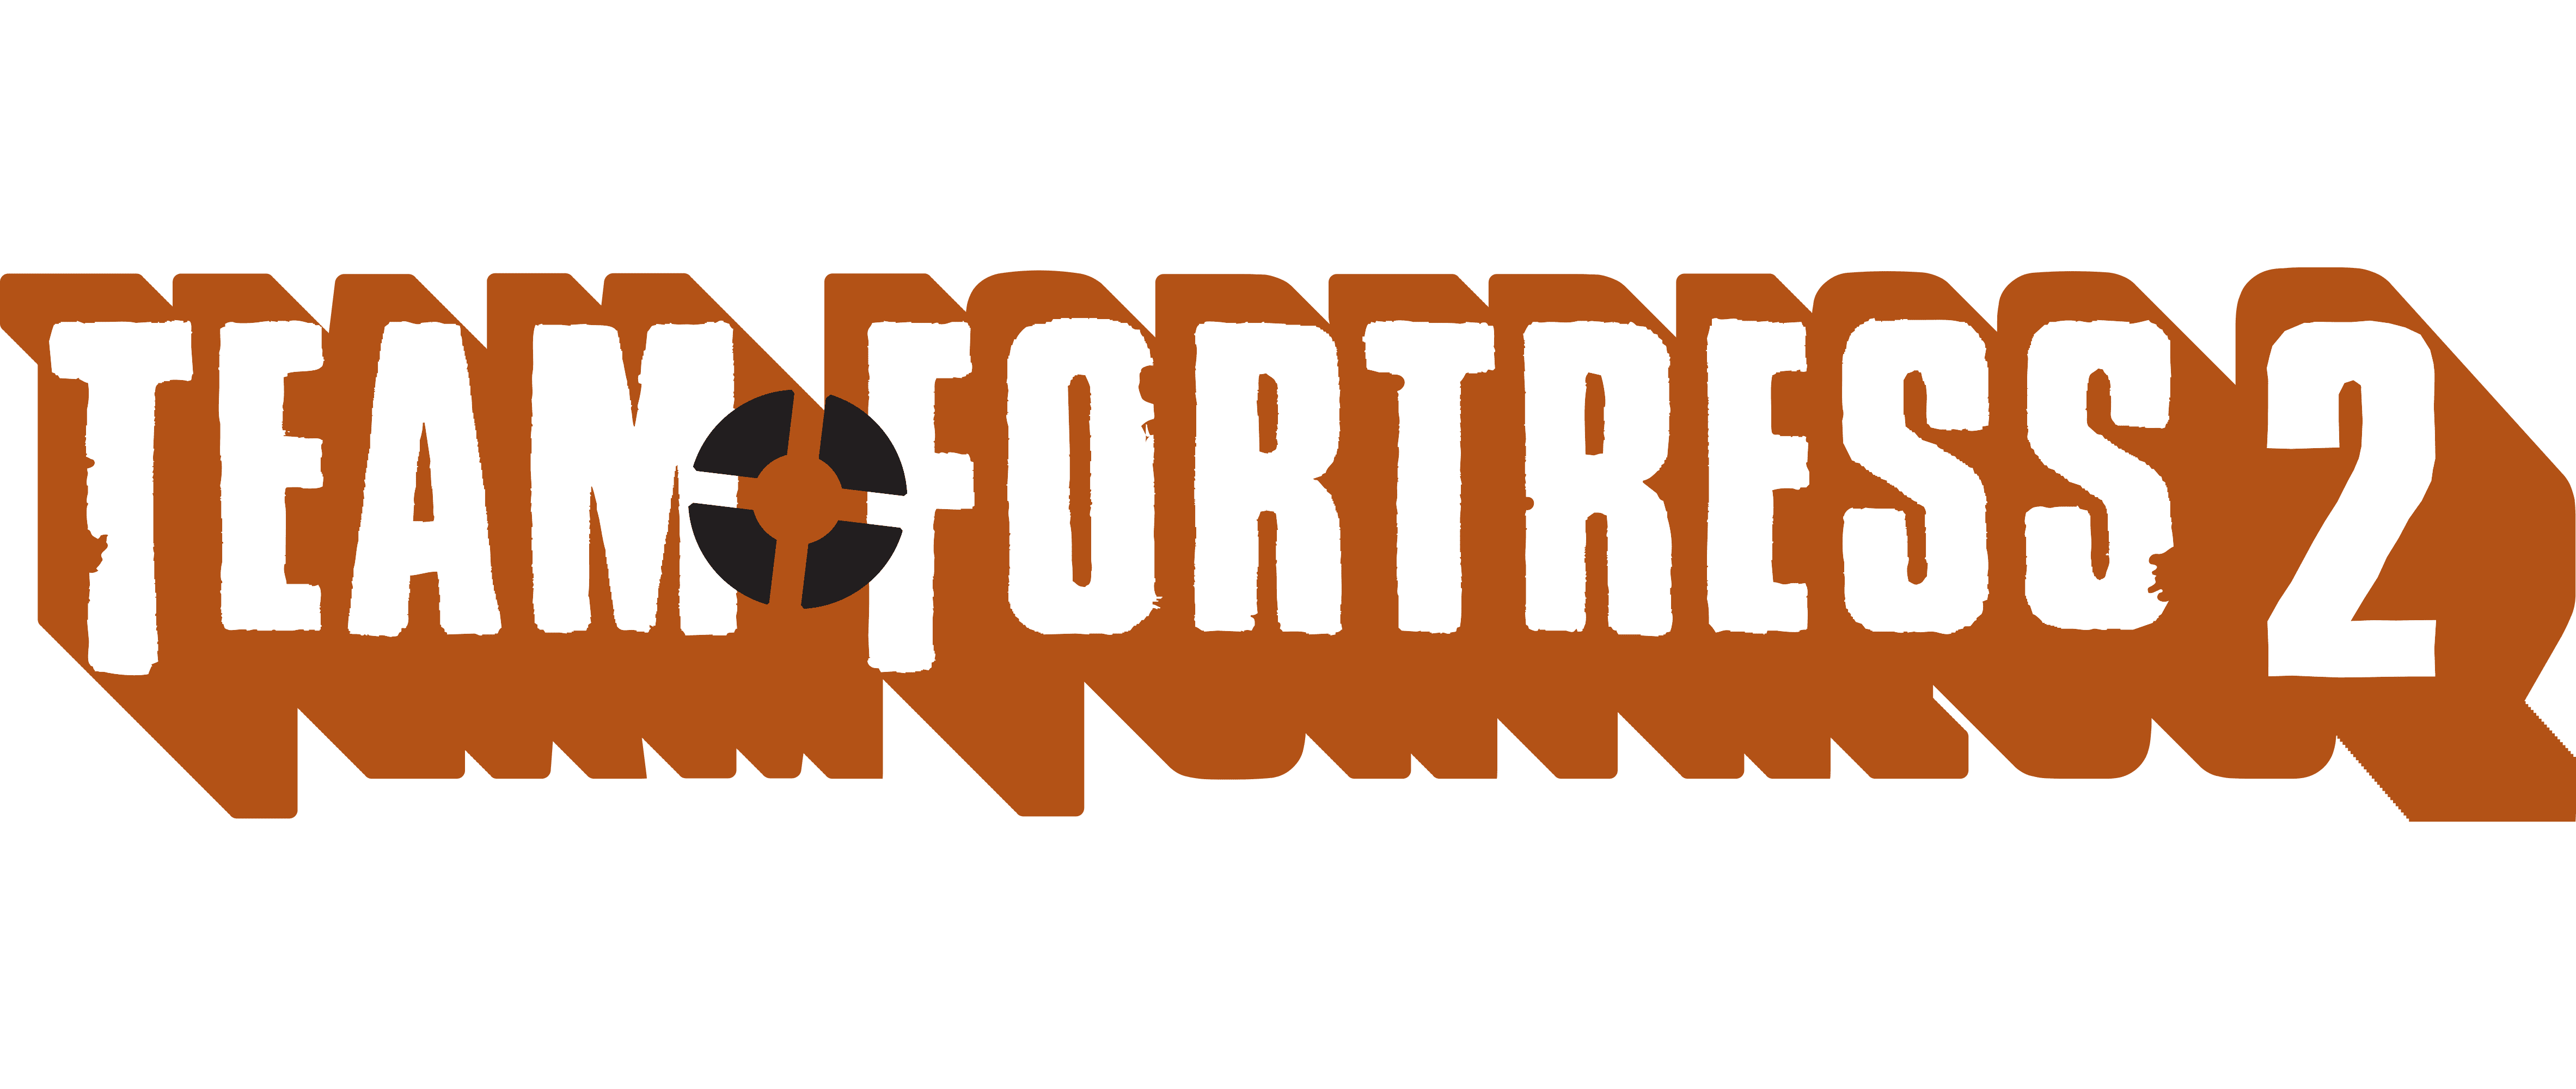 Team Fortress 2 Logo Transparent File